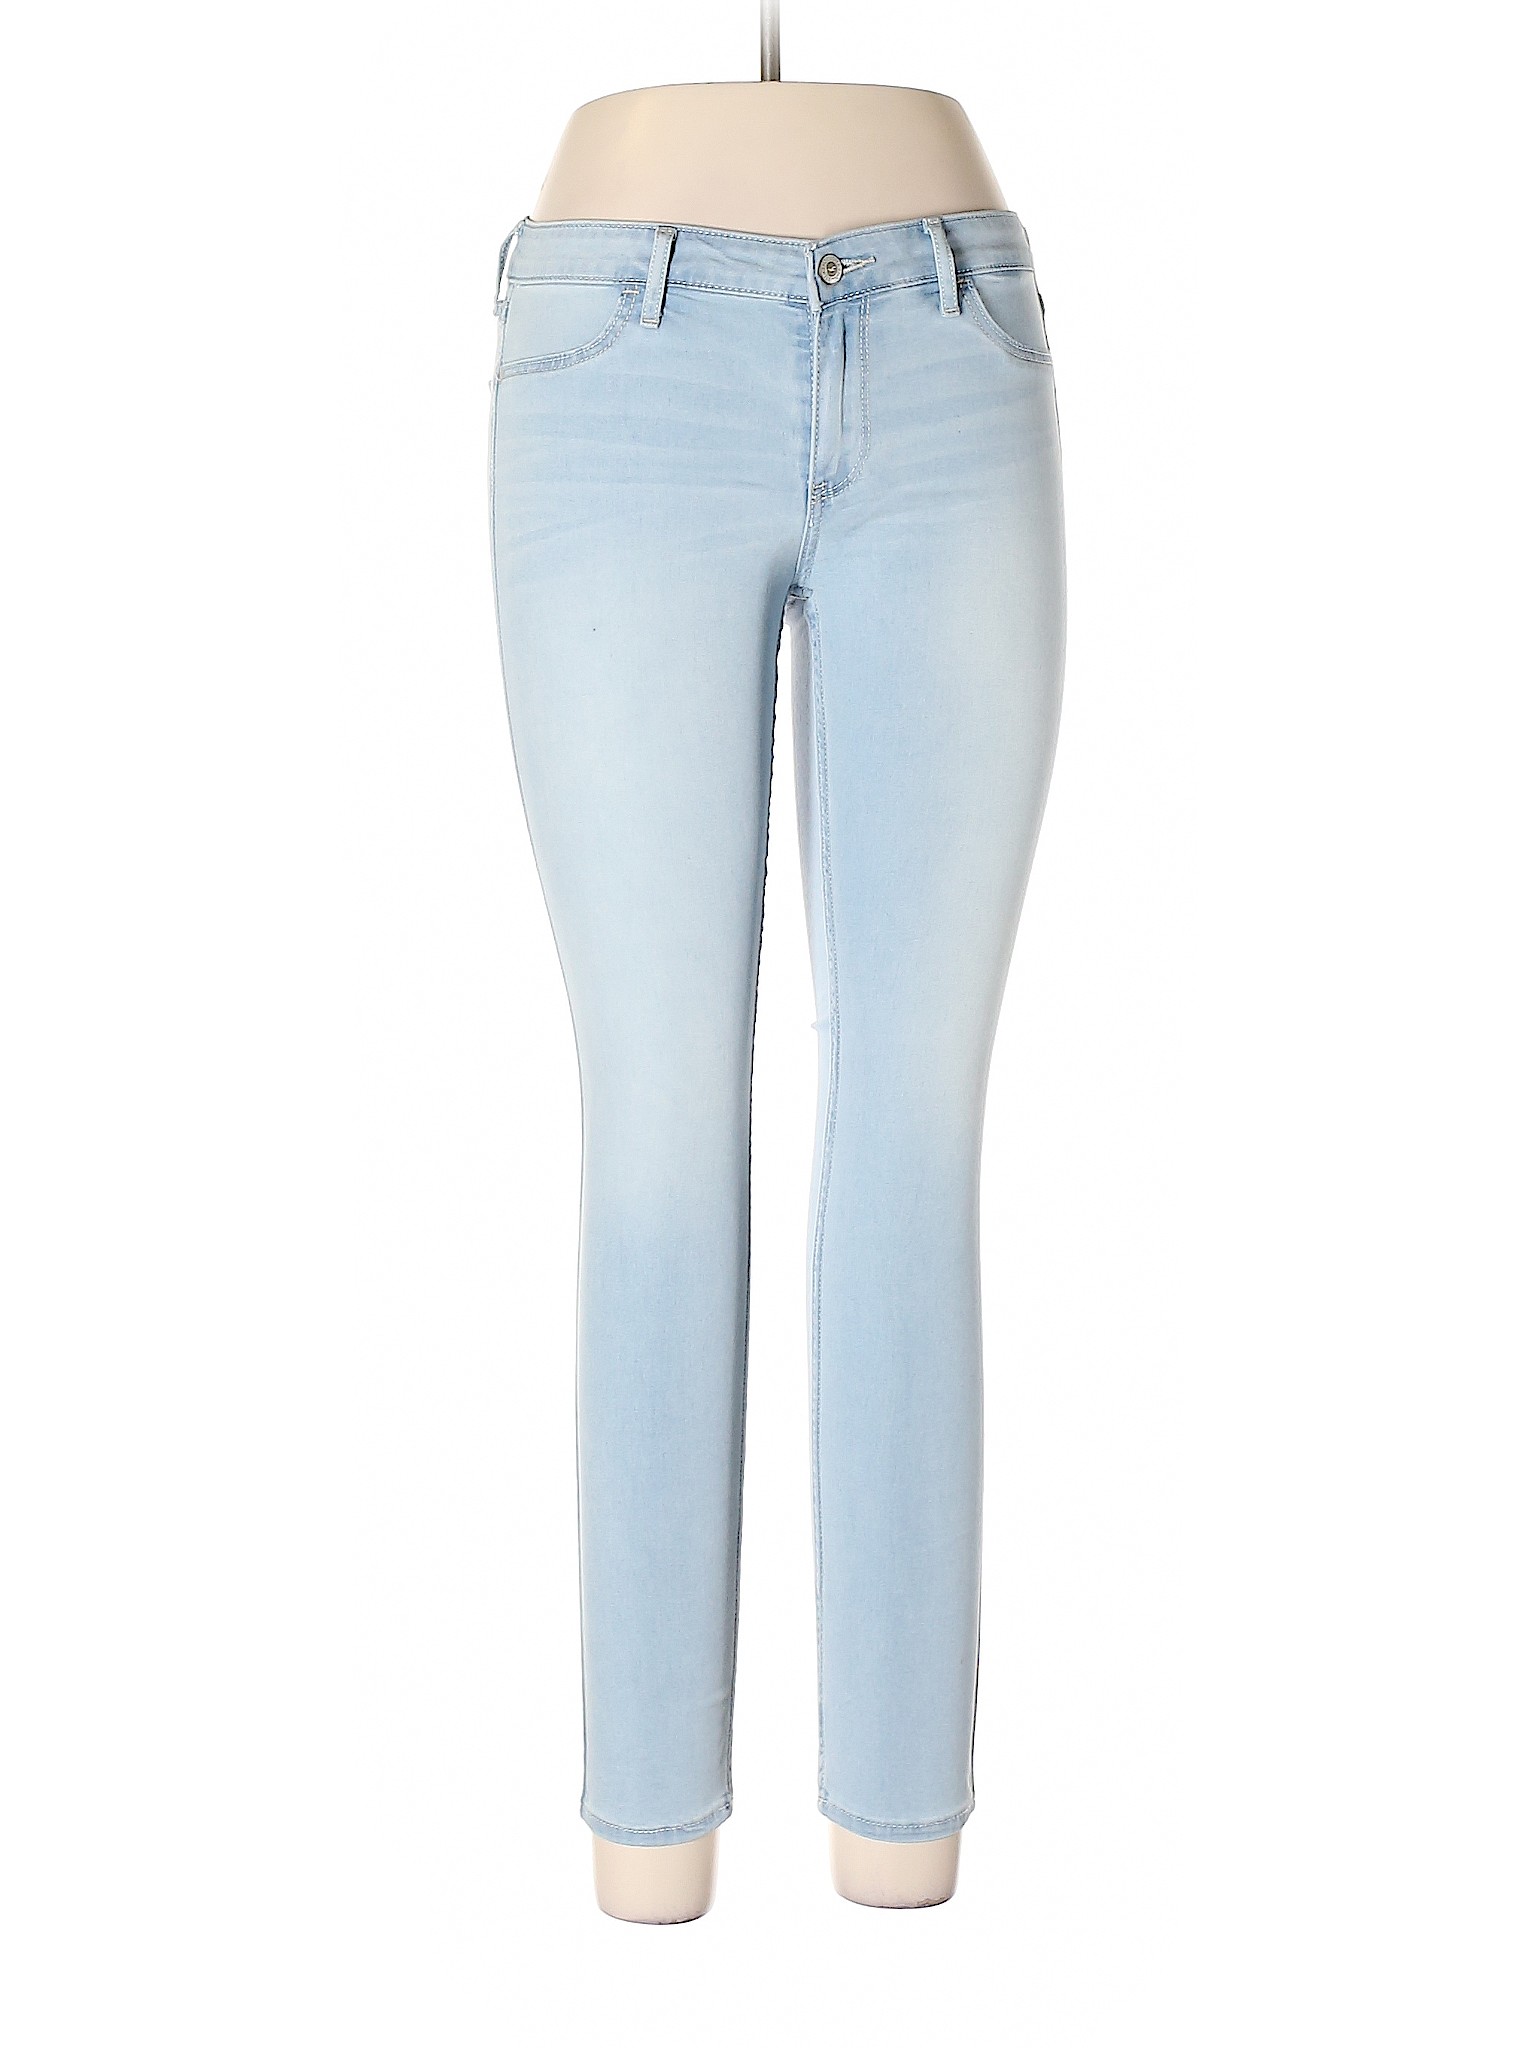 Hollister Jeans Inseam Chart